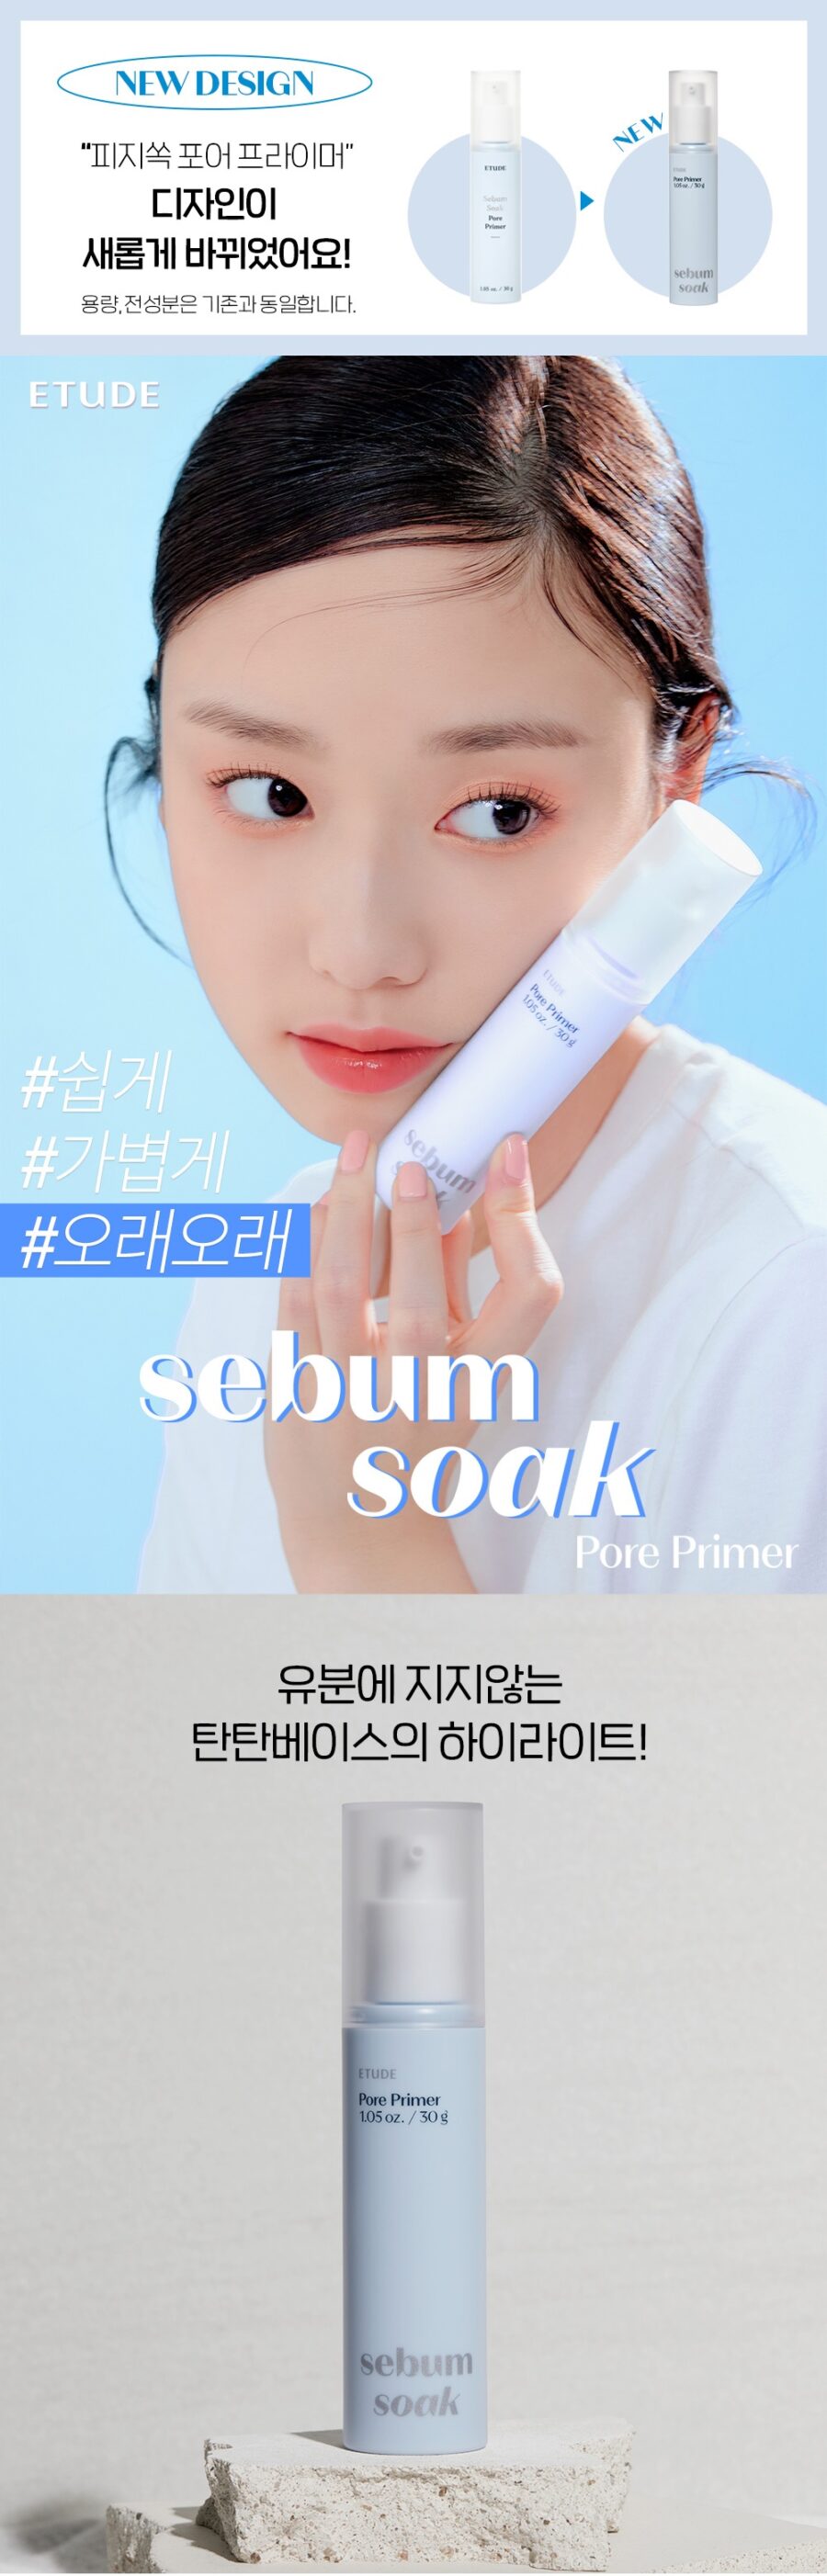 Etude House Sebum Soak Pore Primer korean skincare product online shop malaysia china india1